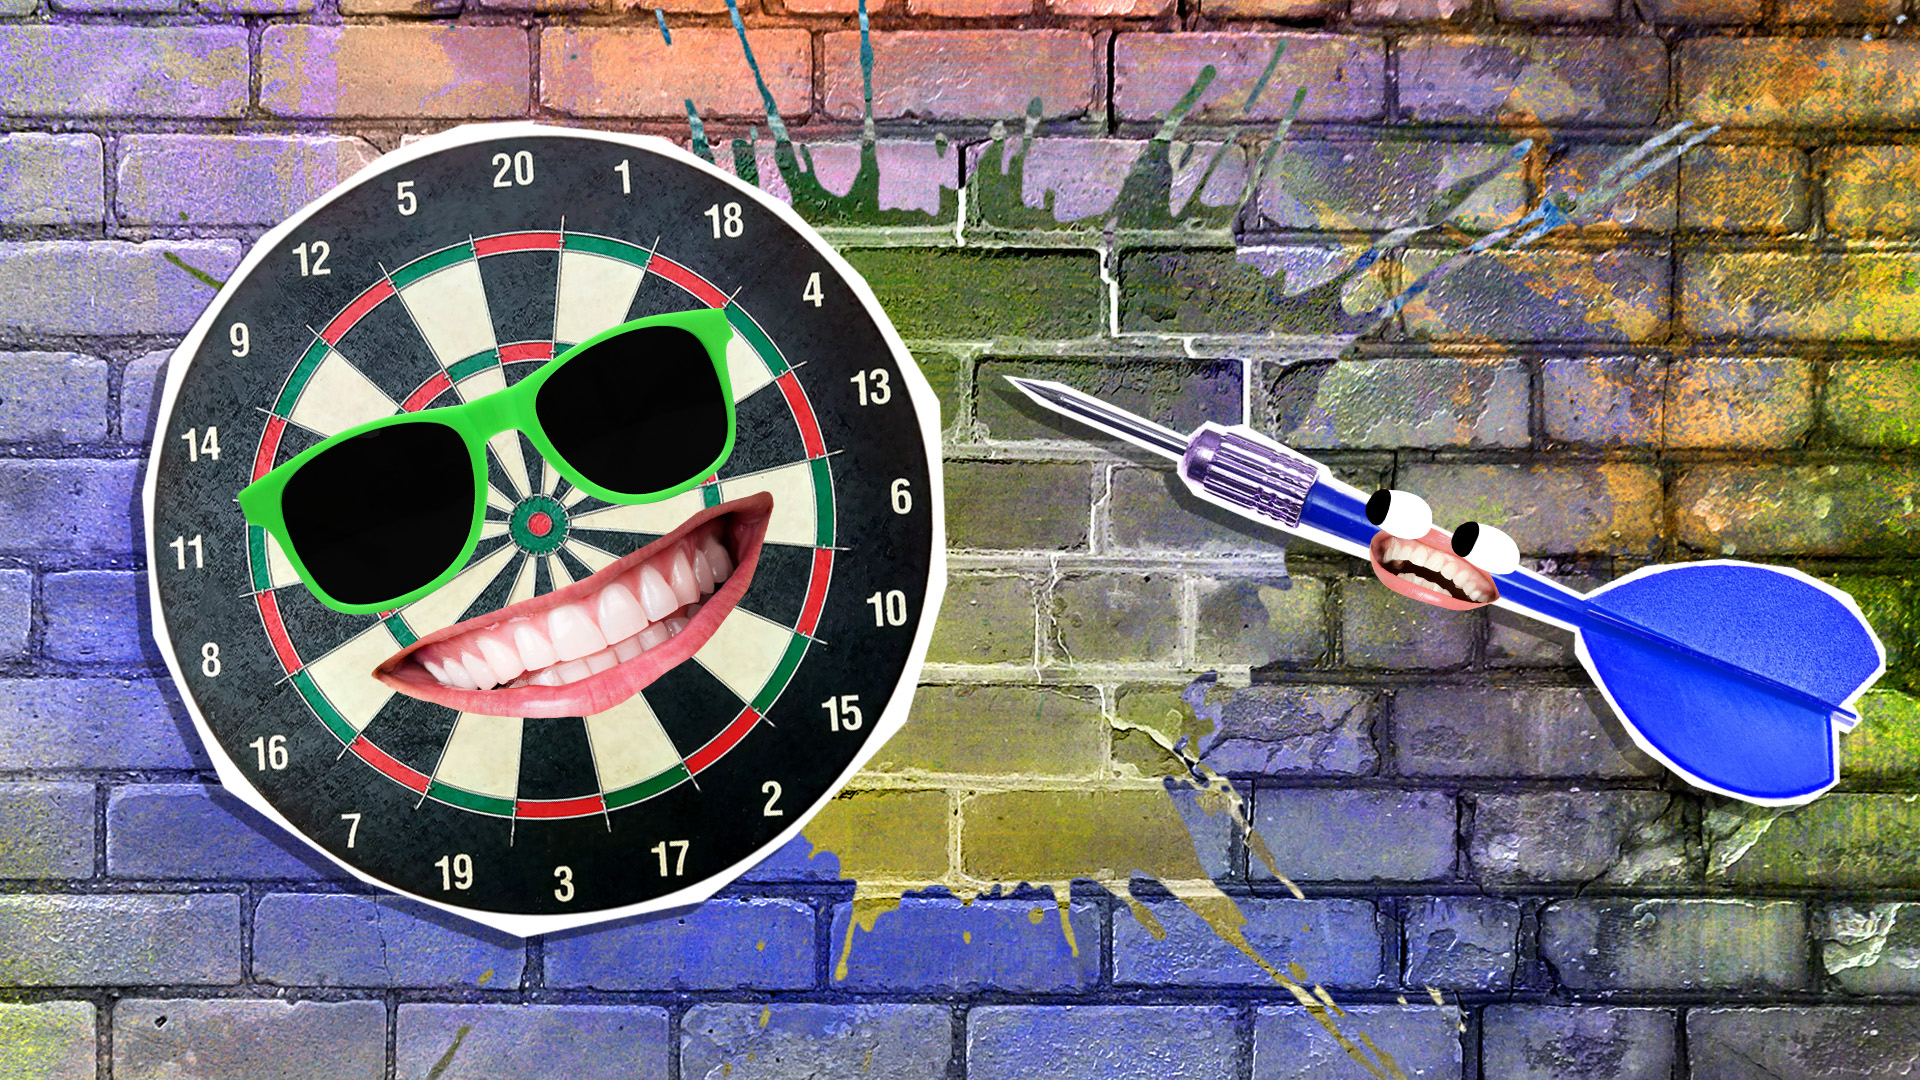 A dart aimed at a board